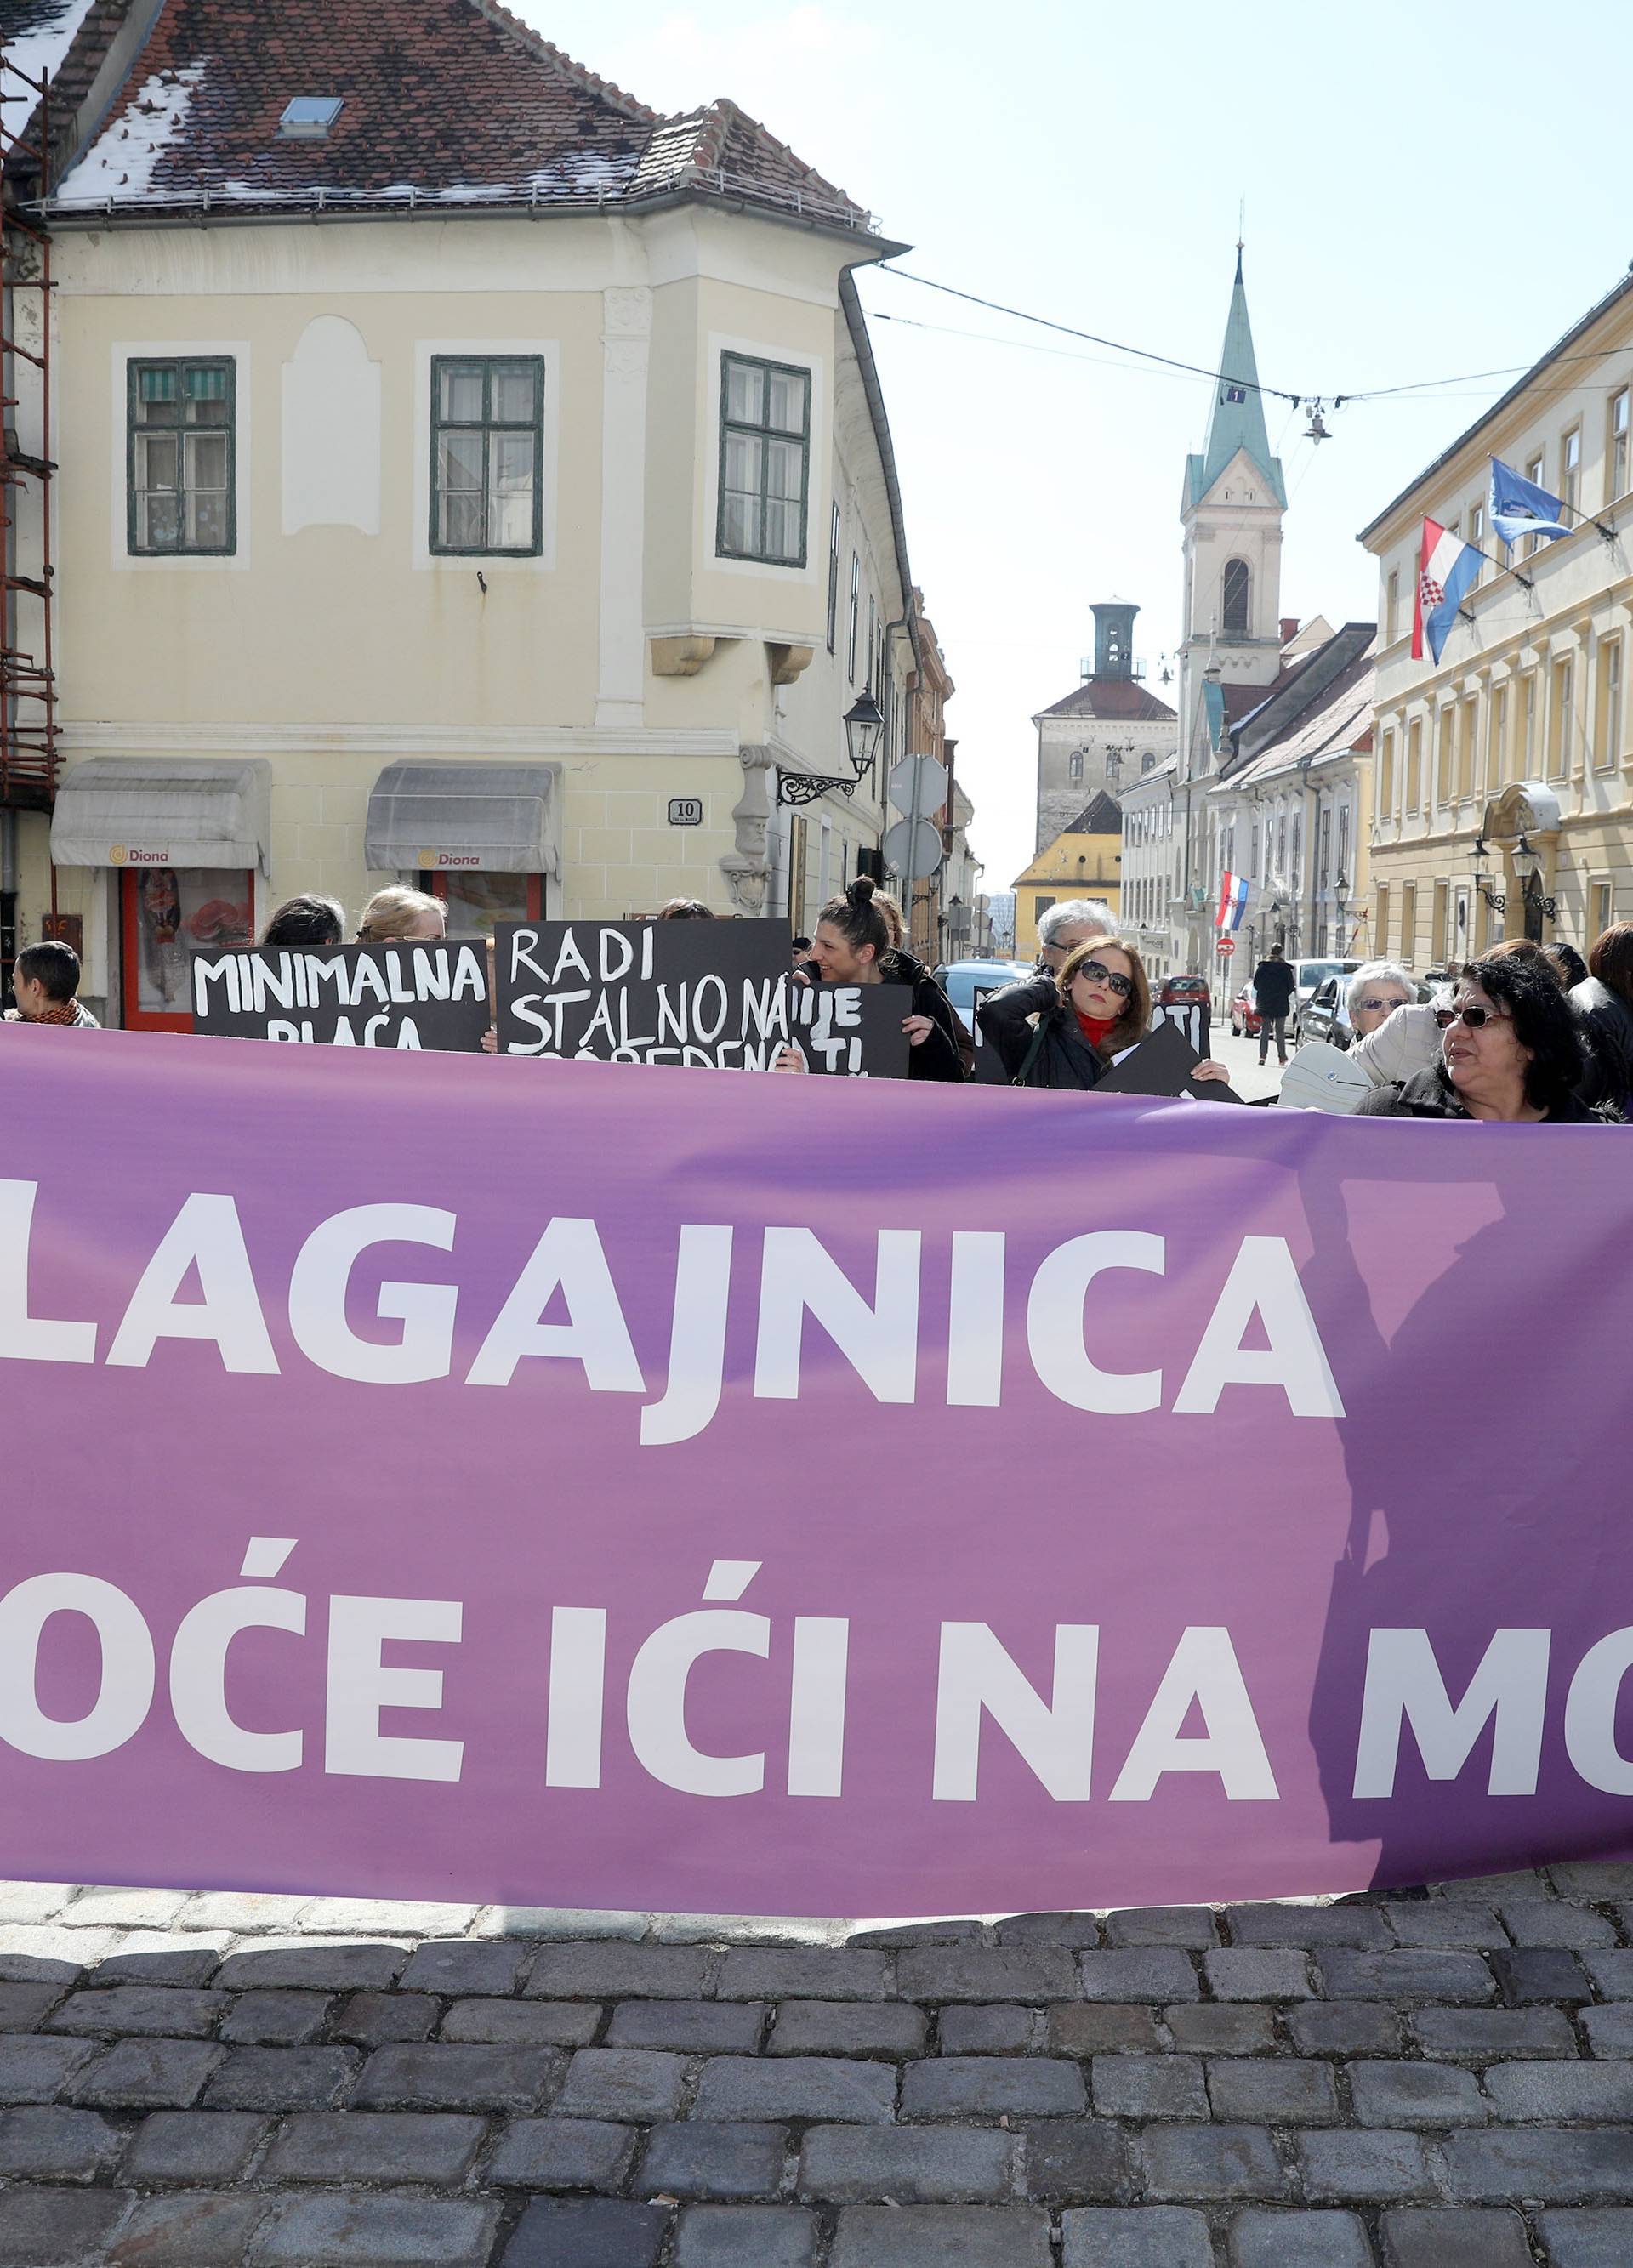 Prosvjed žena pred Vladom: Predale Plenkoviću zahtjeve